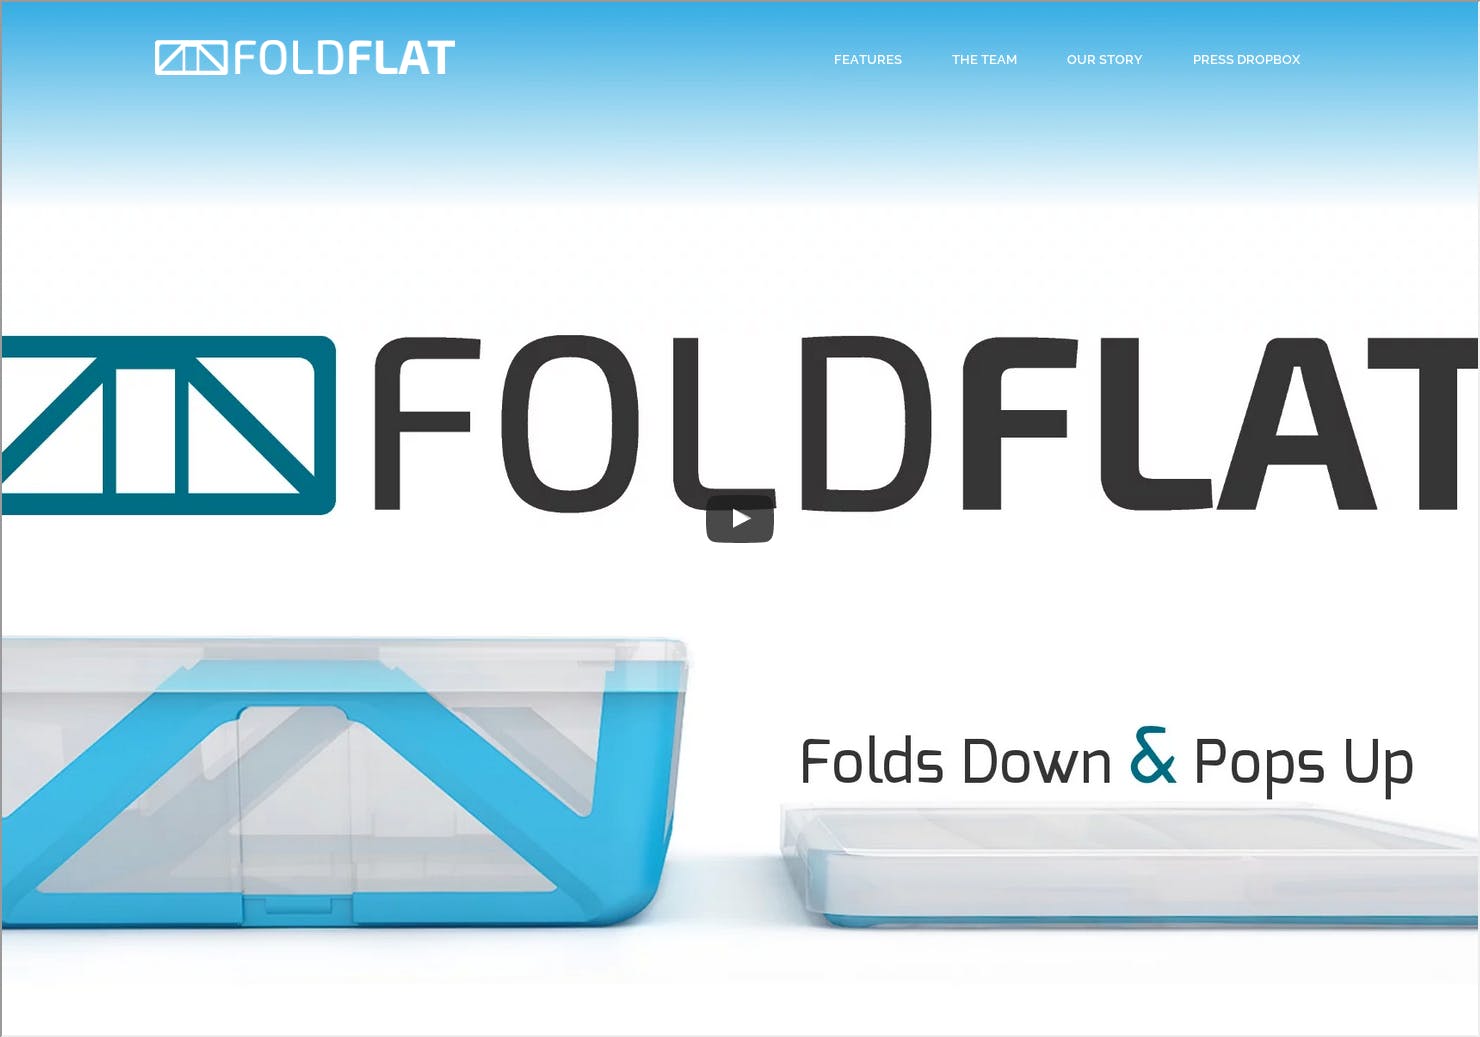 Foldflat media 2